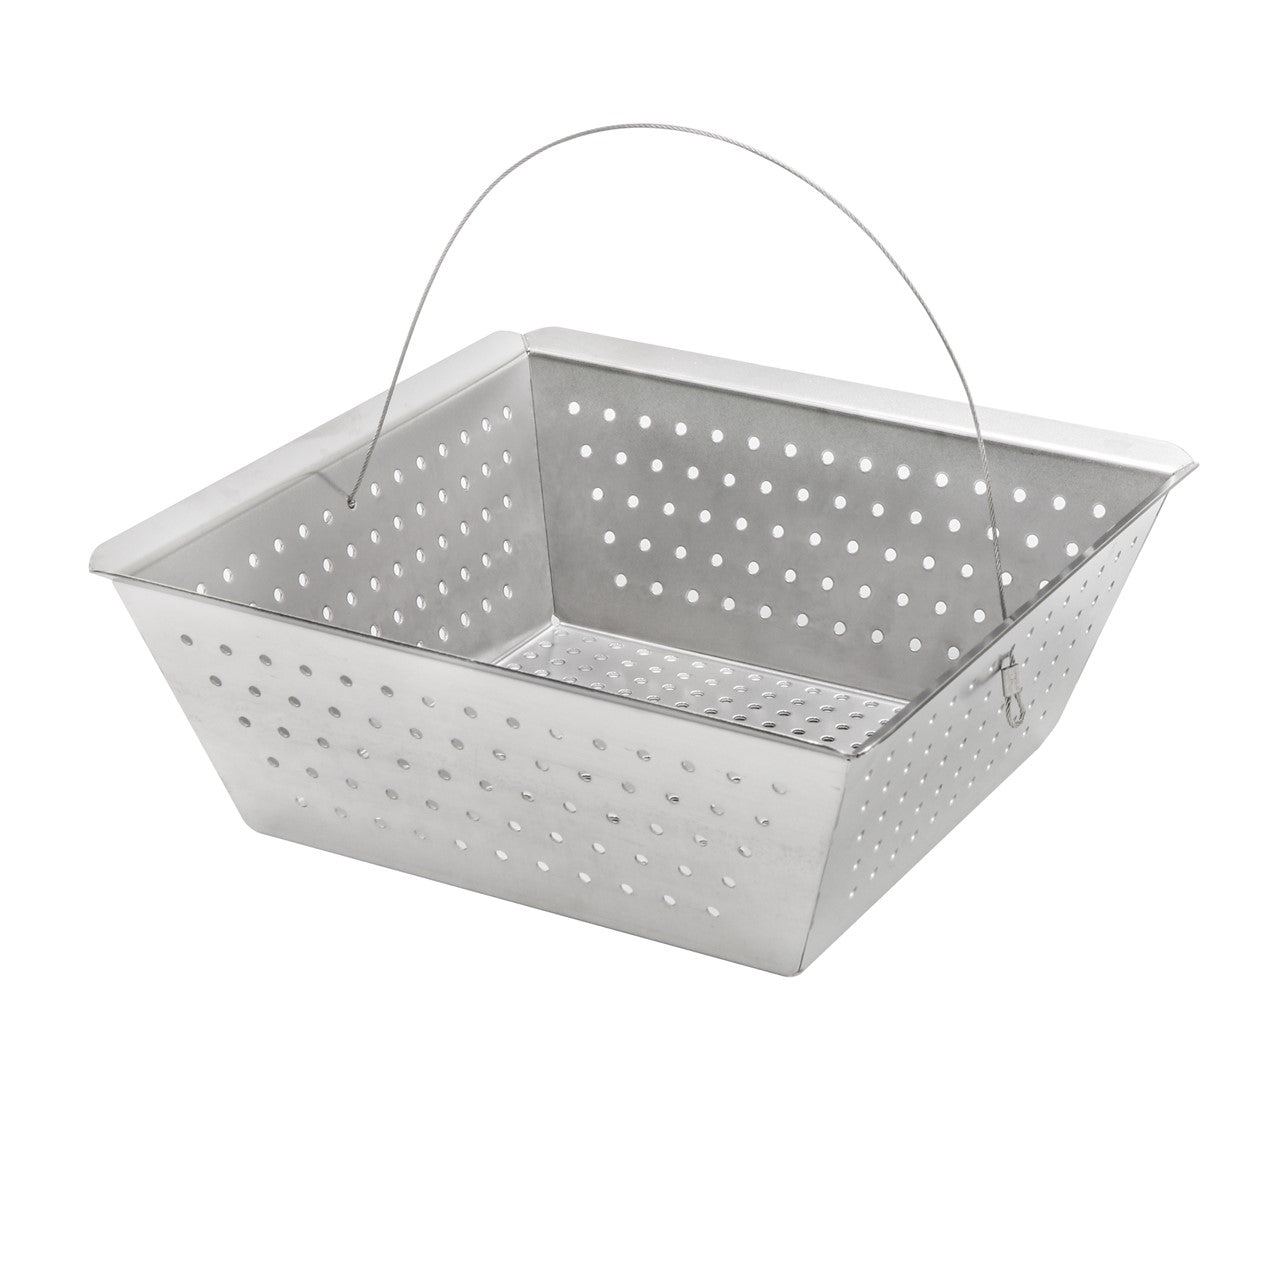 1pc Kitchen Sink Drain Strainer With Filter Basket For Dish Washing, Sink,  Floor